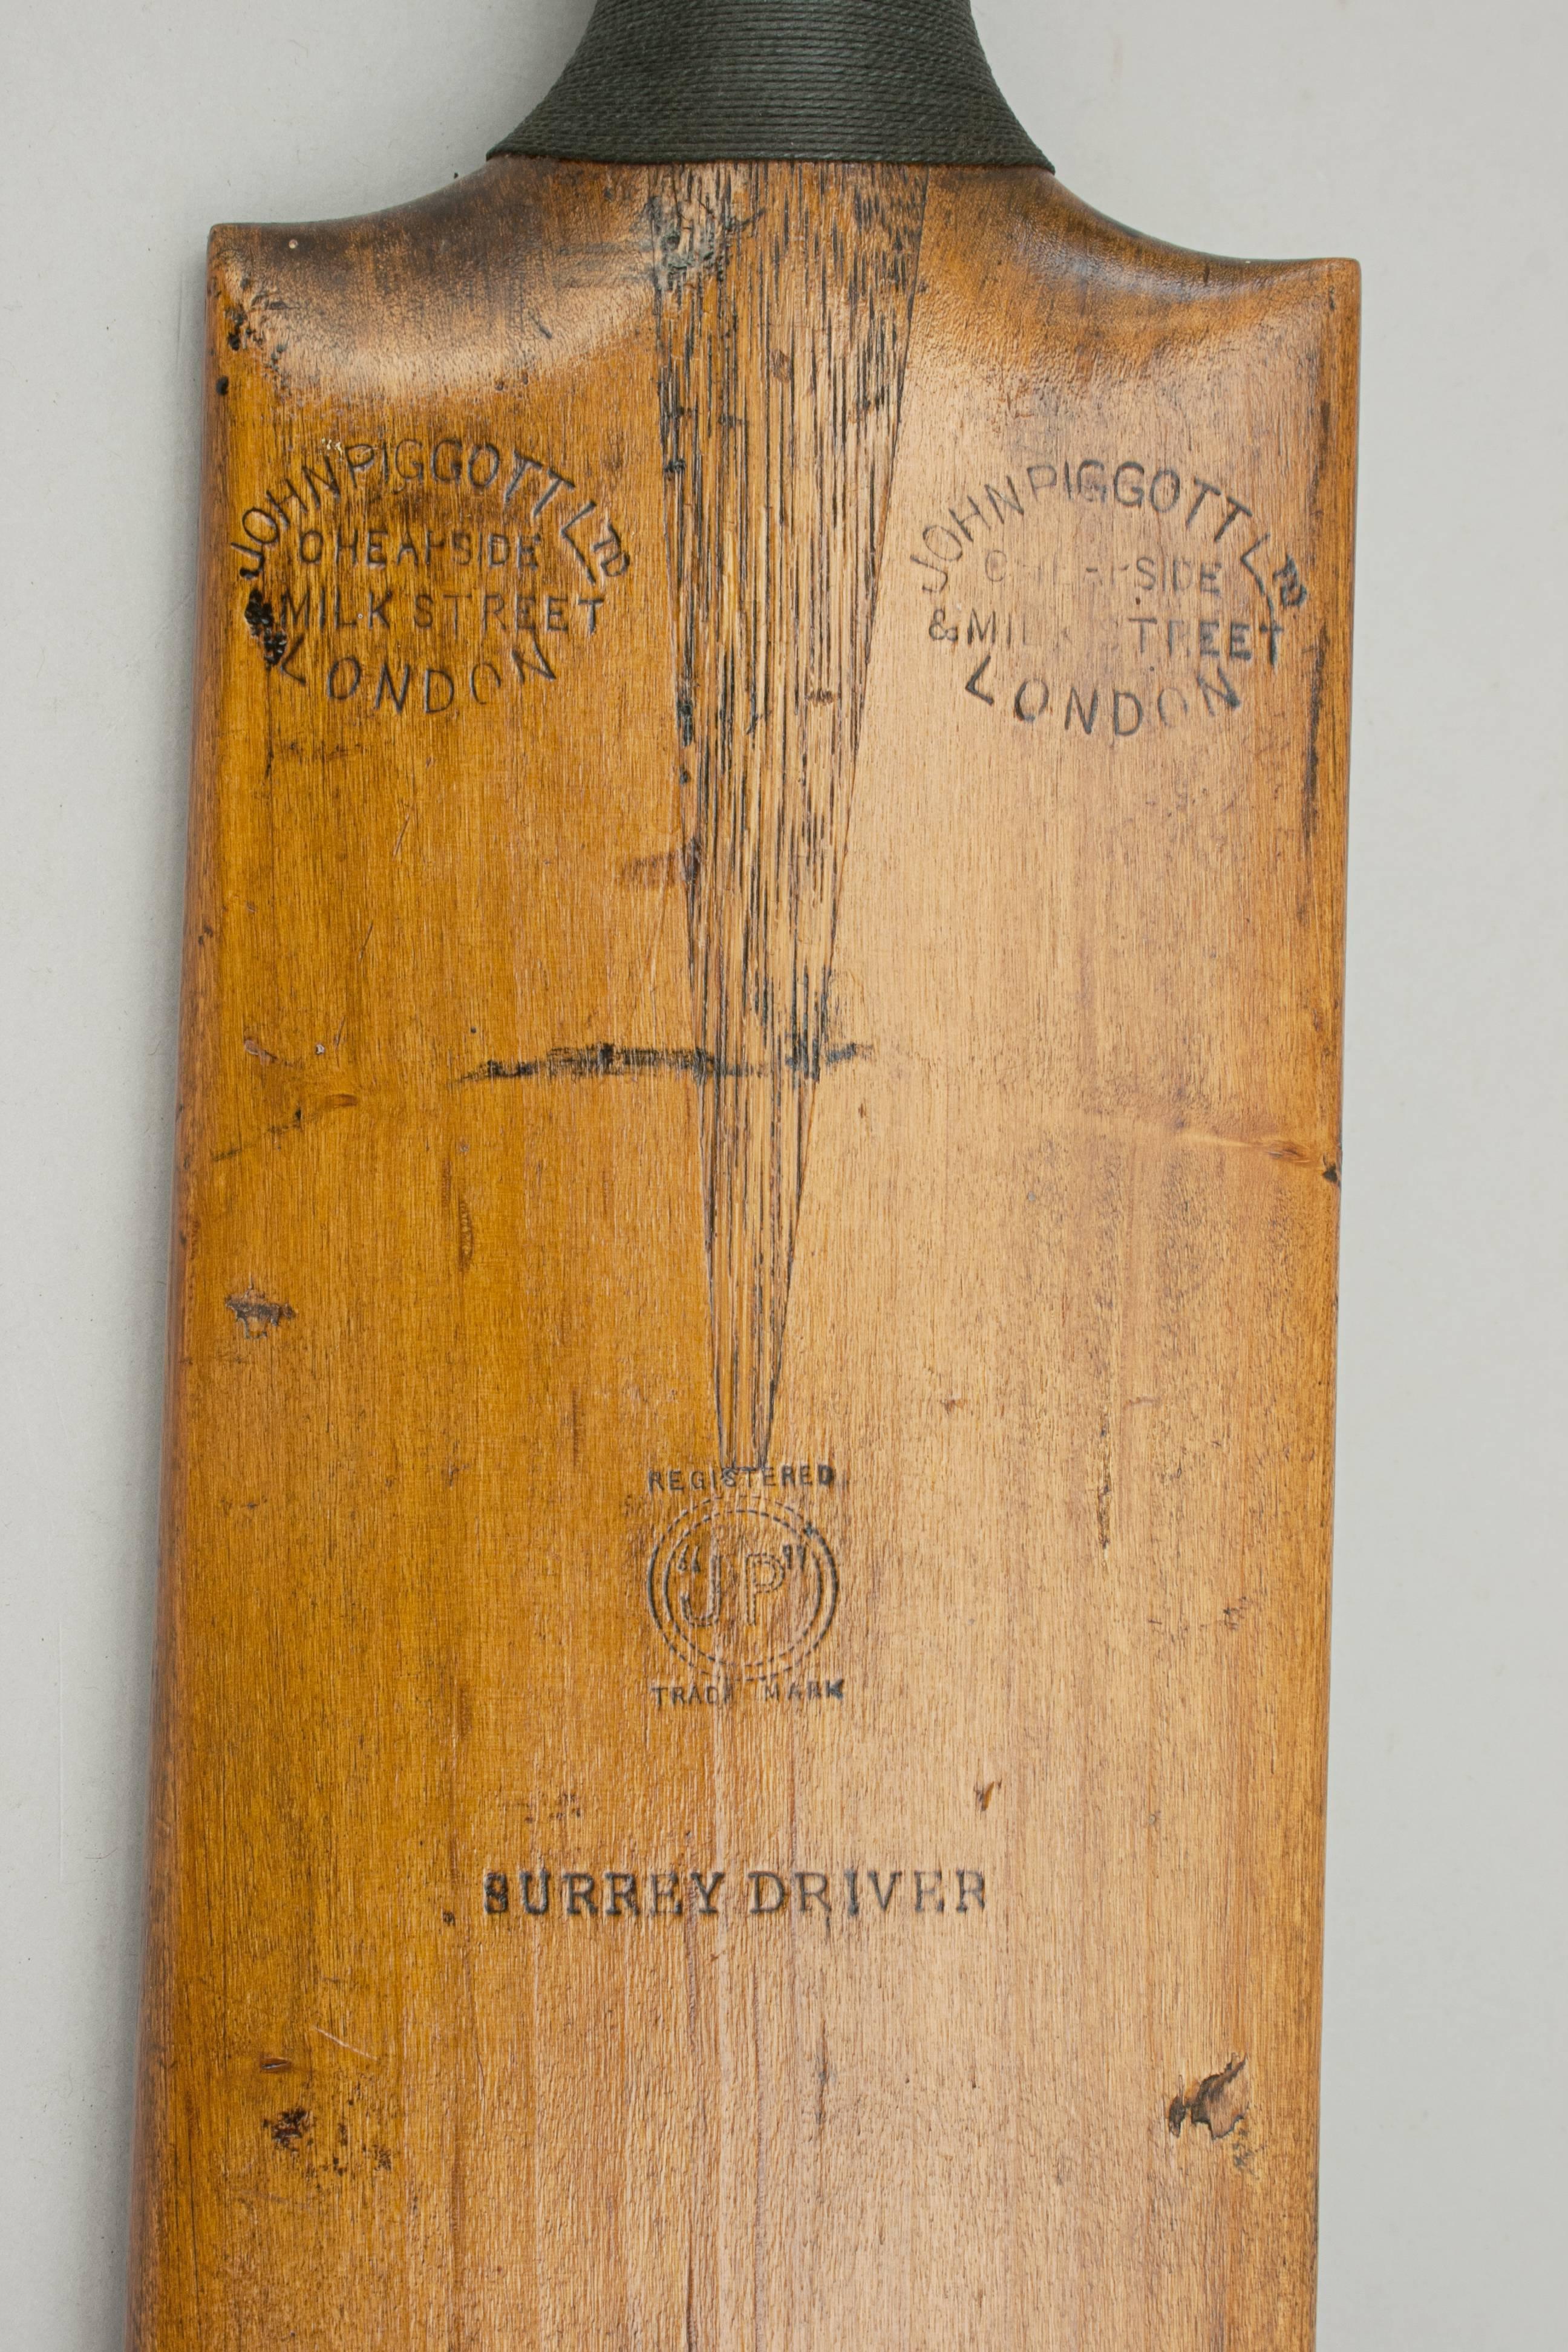 Surrey Driver cricket bat.
A thick handled willow cricket bat retailed by John Piggott Ltd., London. The bat has nice round shoulders, corded grip with the bat embossed 'John Piggott Ltd., Cheapside, Milk Street, London' on both shoulders, 'Surrey